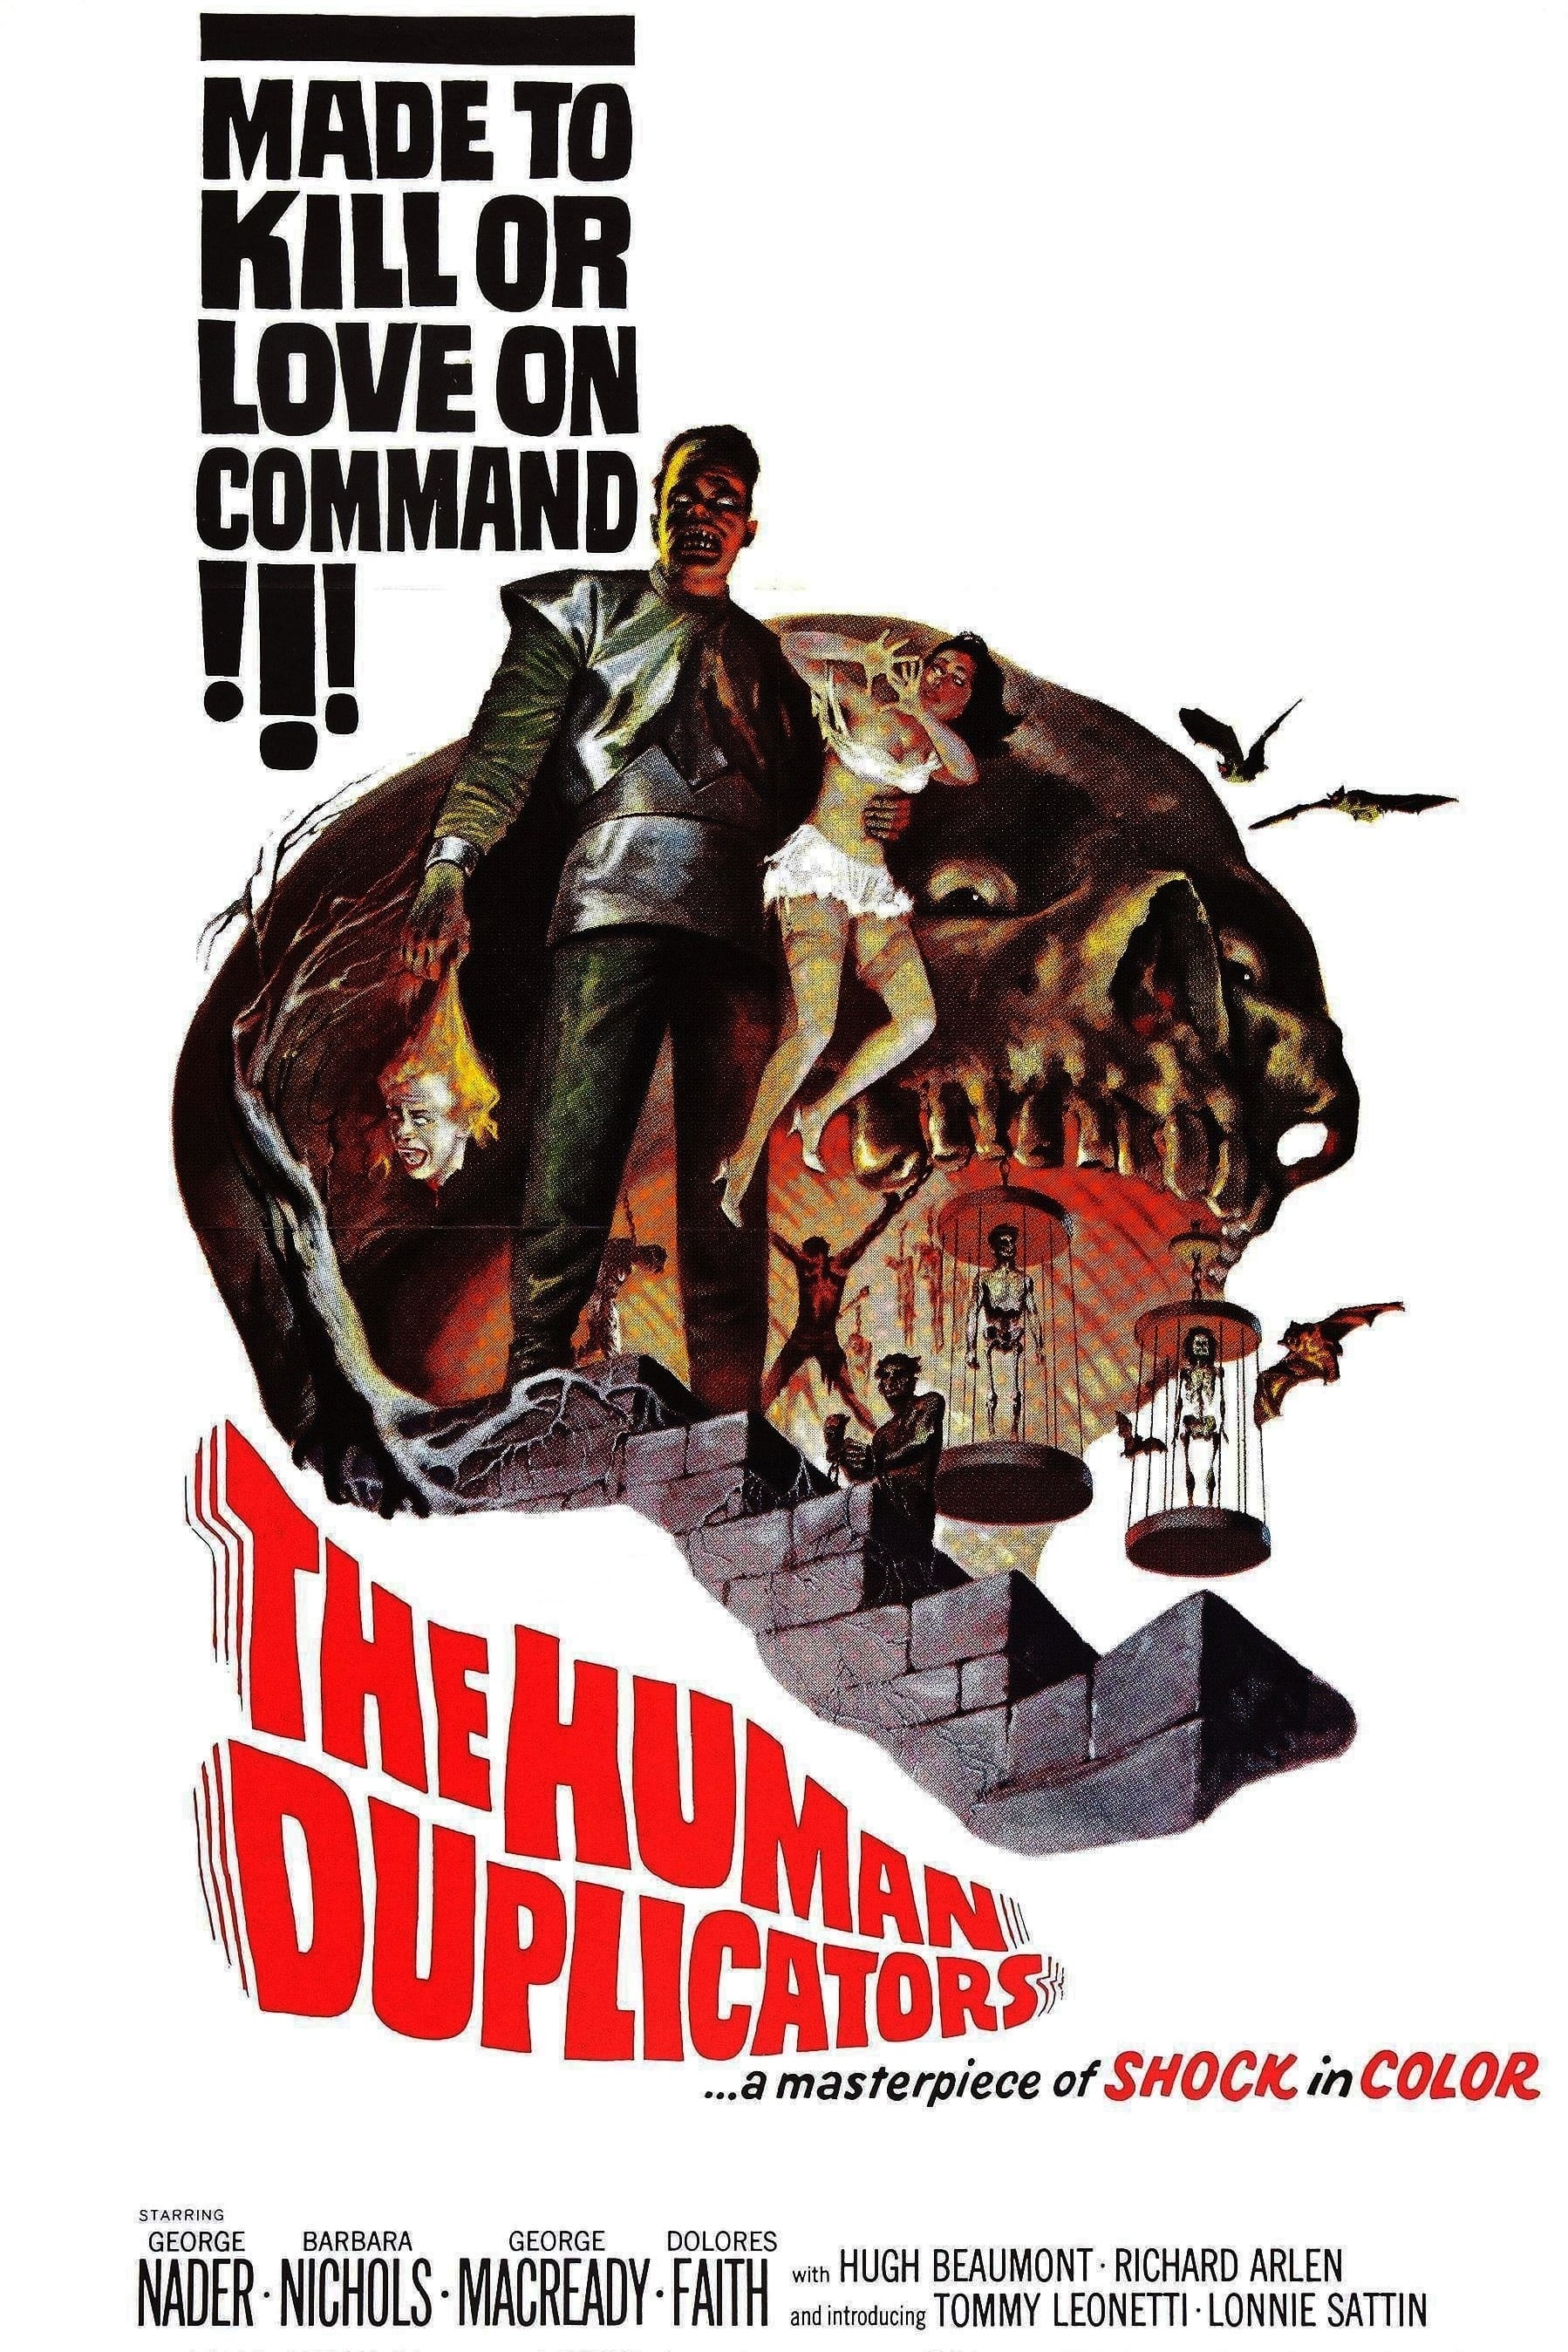 The Human Duplicators (1965)